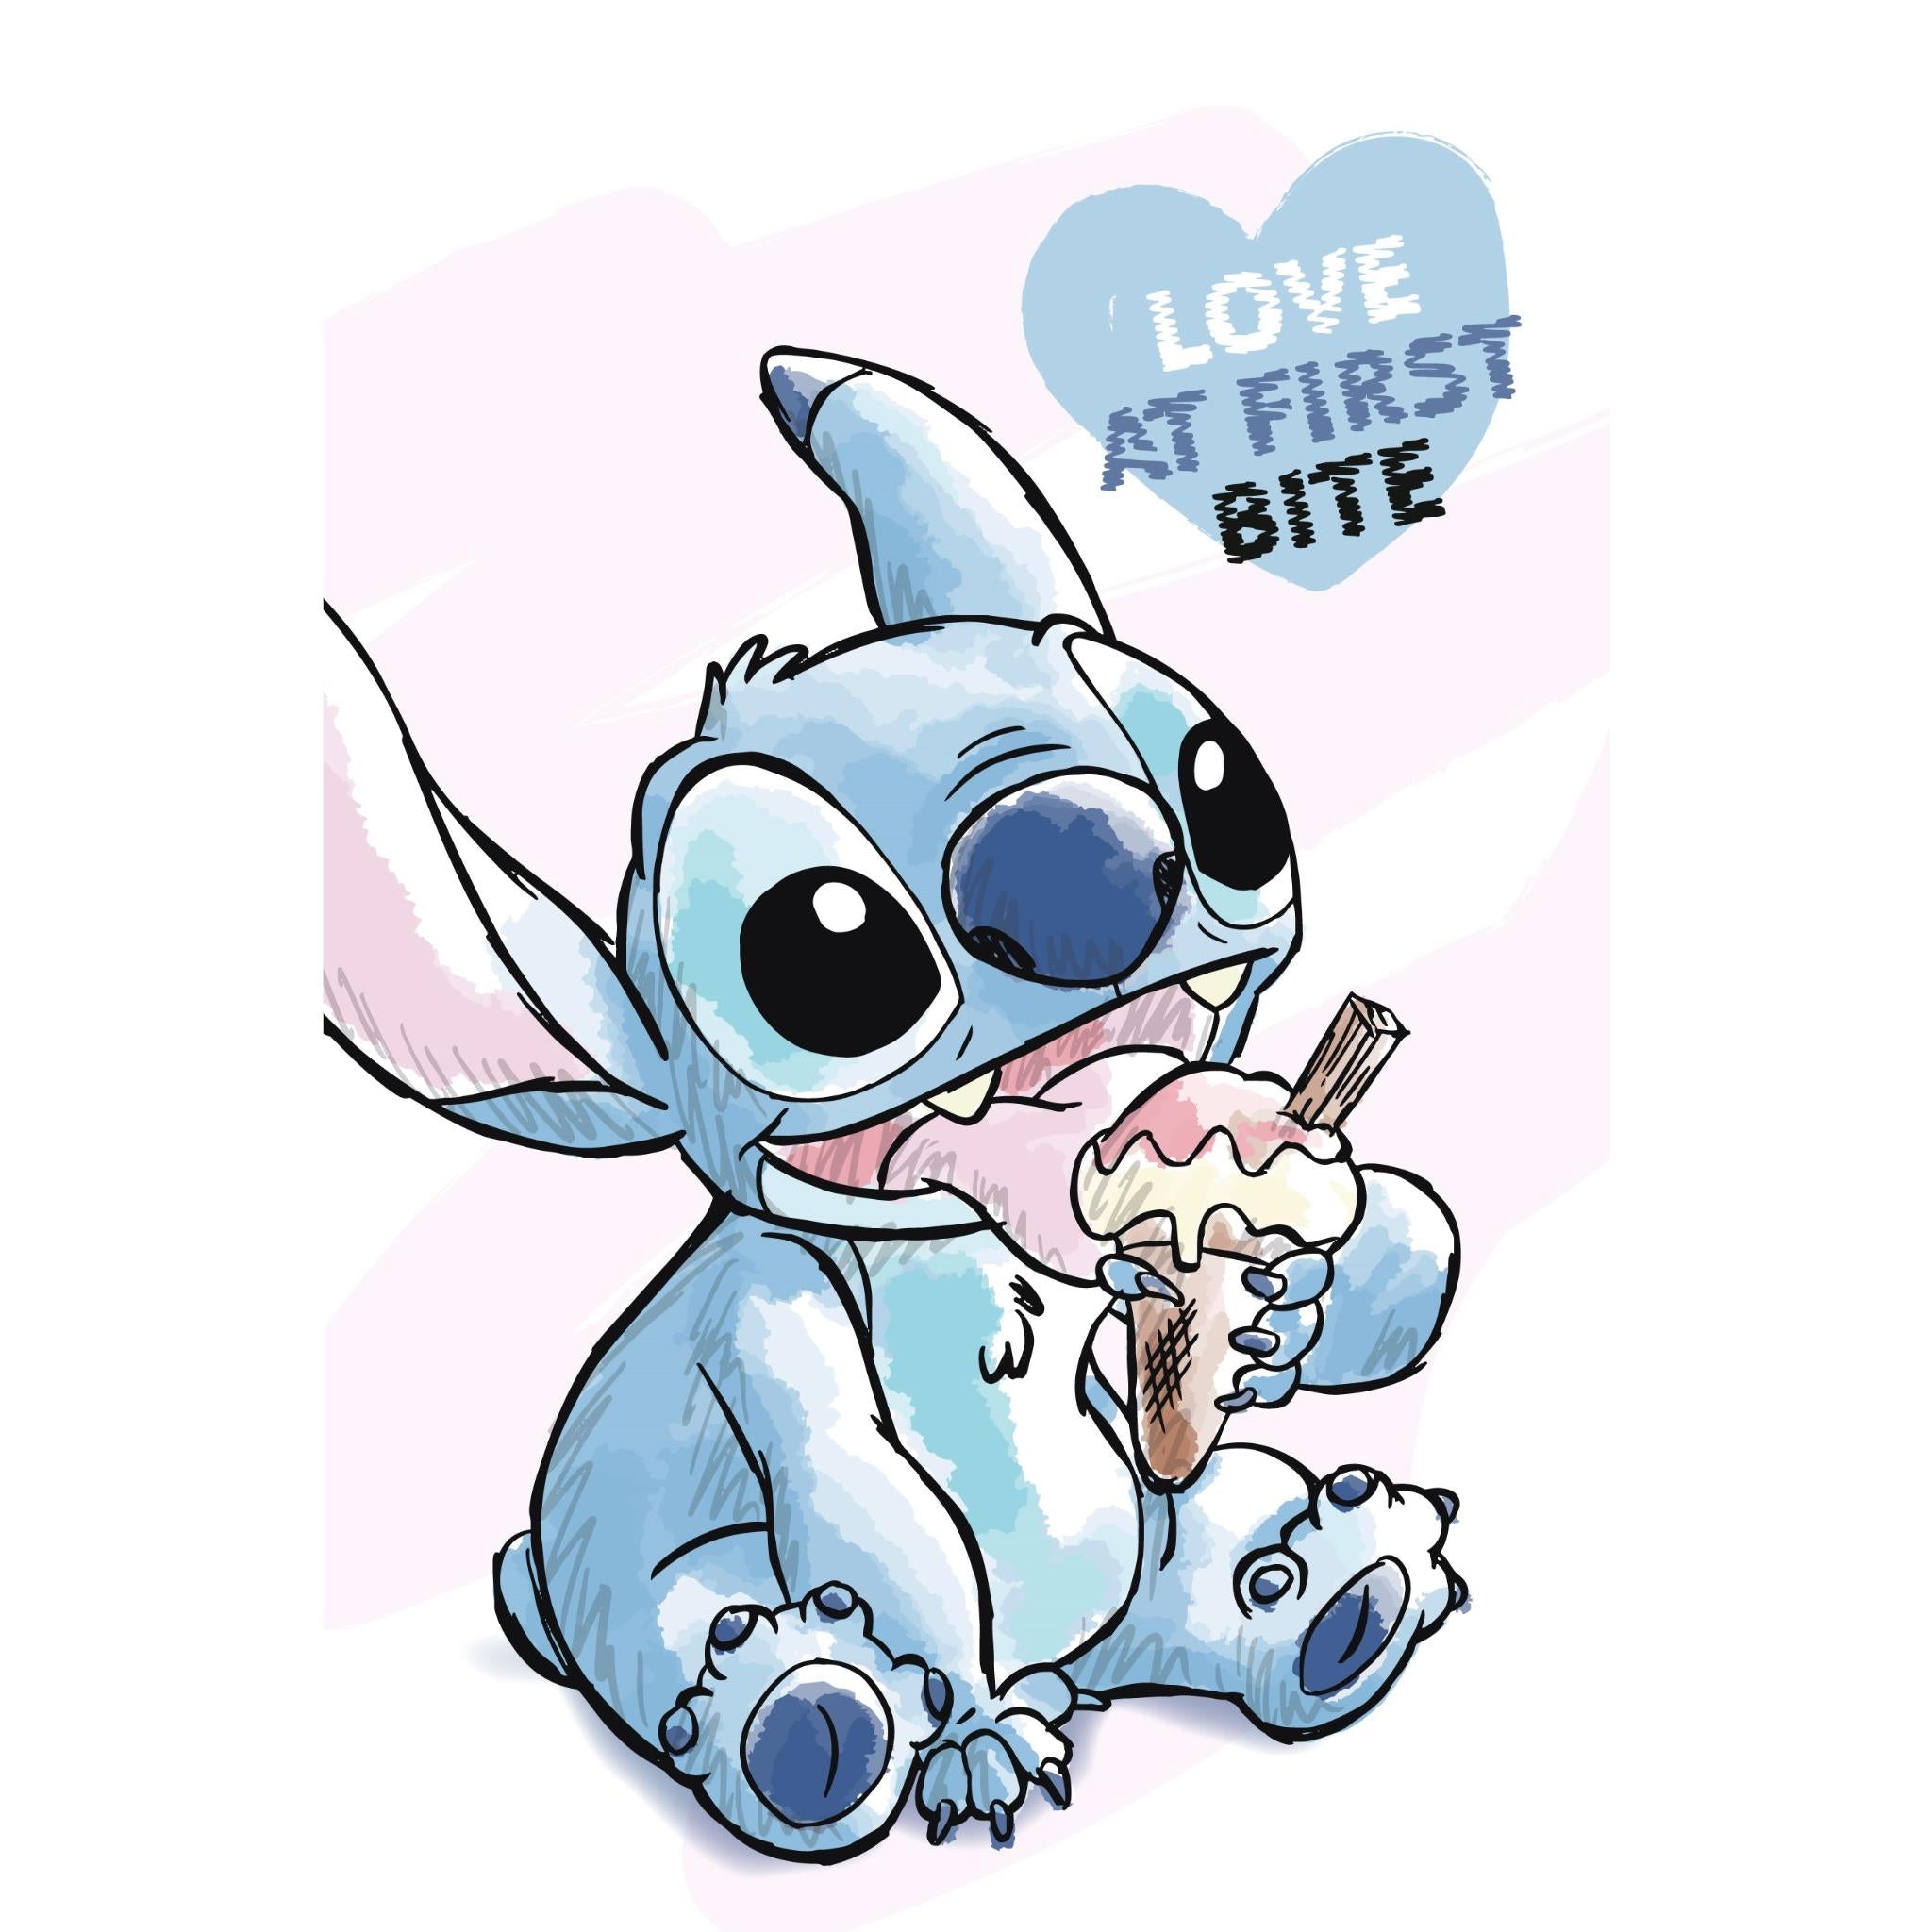 lilo & stitch - love at first bite poster